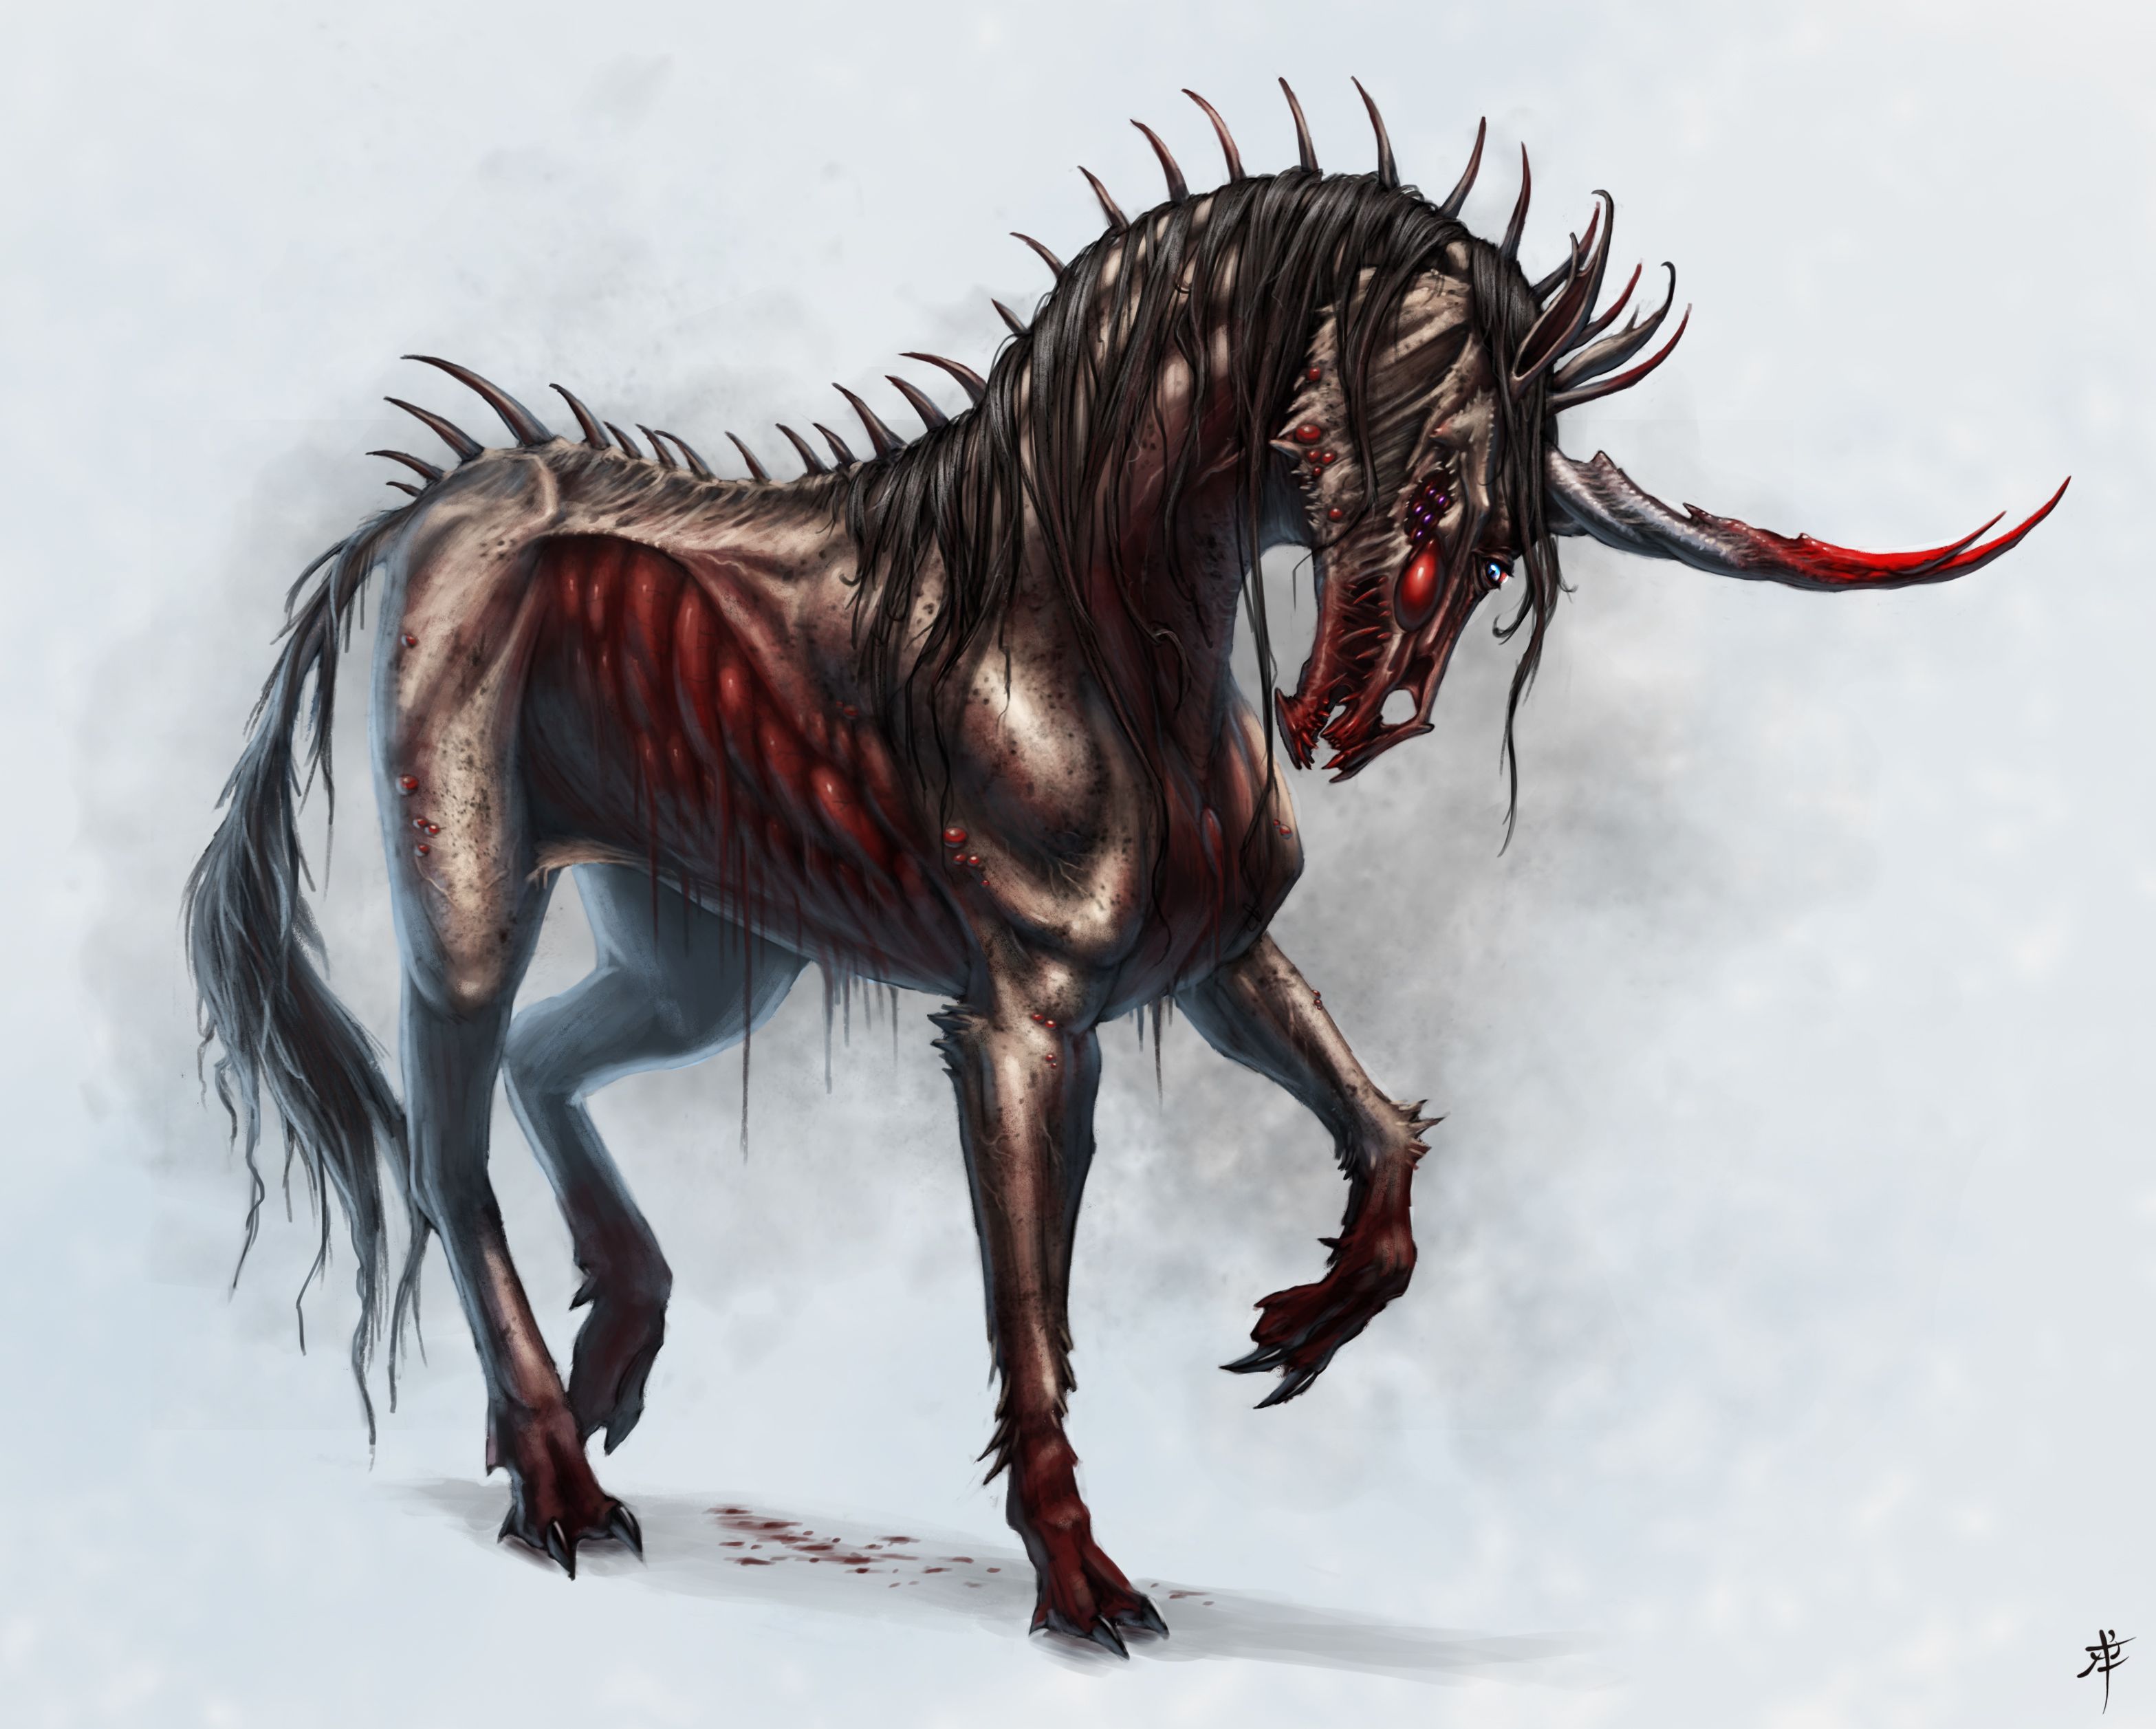 evil demented drawings unicorn, Unicorn